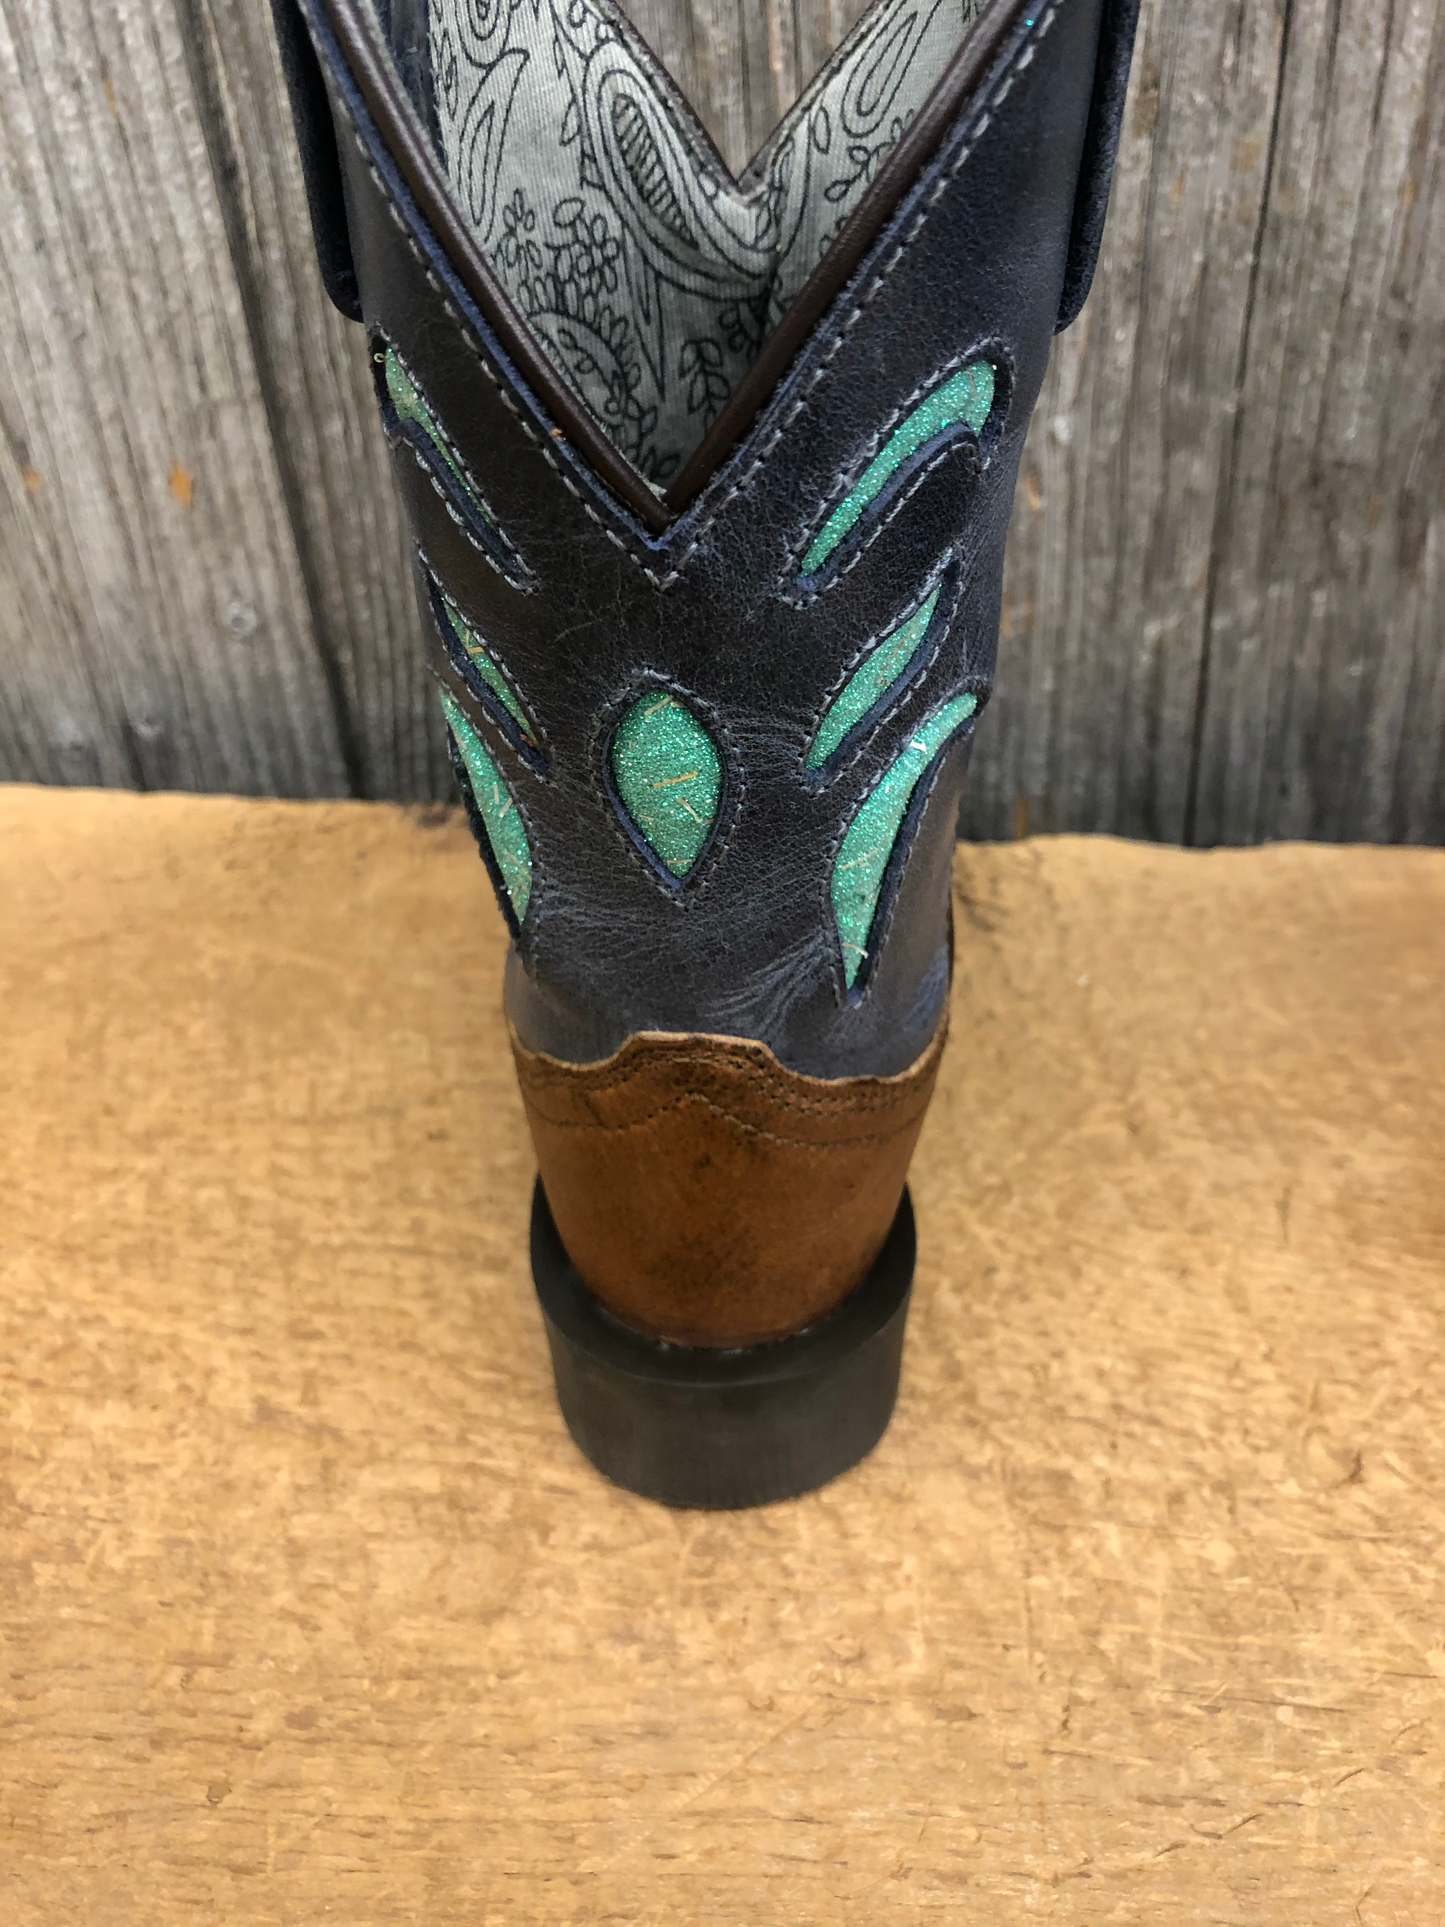 Smoky Mountain Kids Boots-3089c